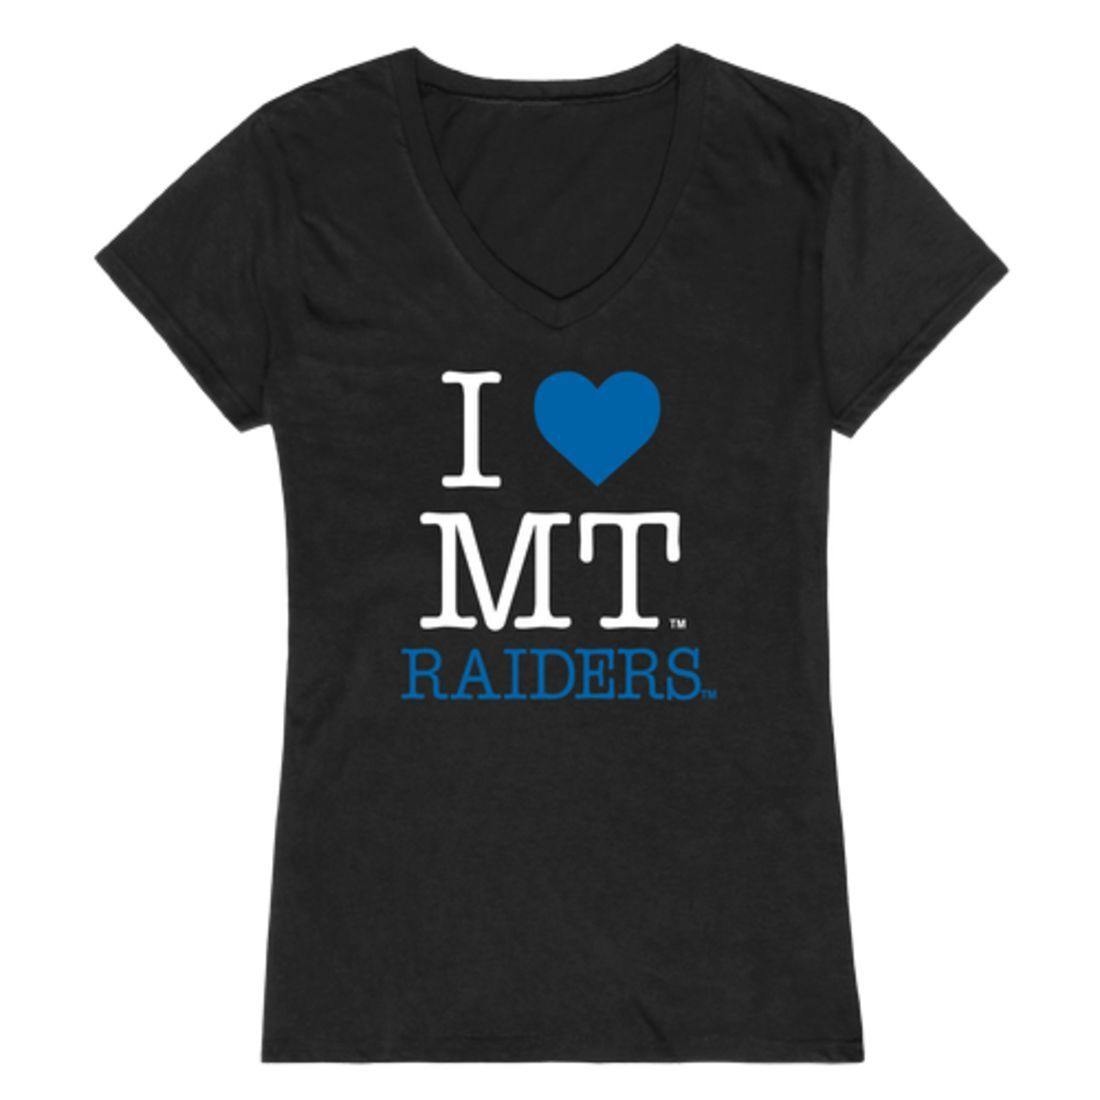 I Love MTSU Middle Tennessee State University Blue Raiders Womens T-Shirt-Campus-Wardrobe